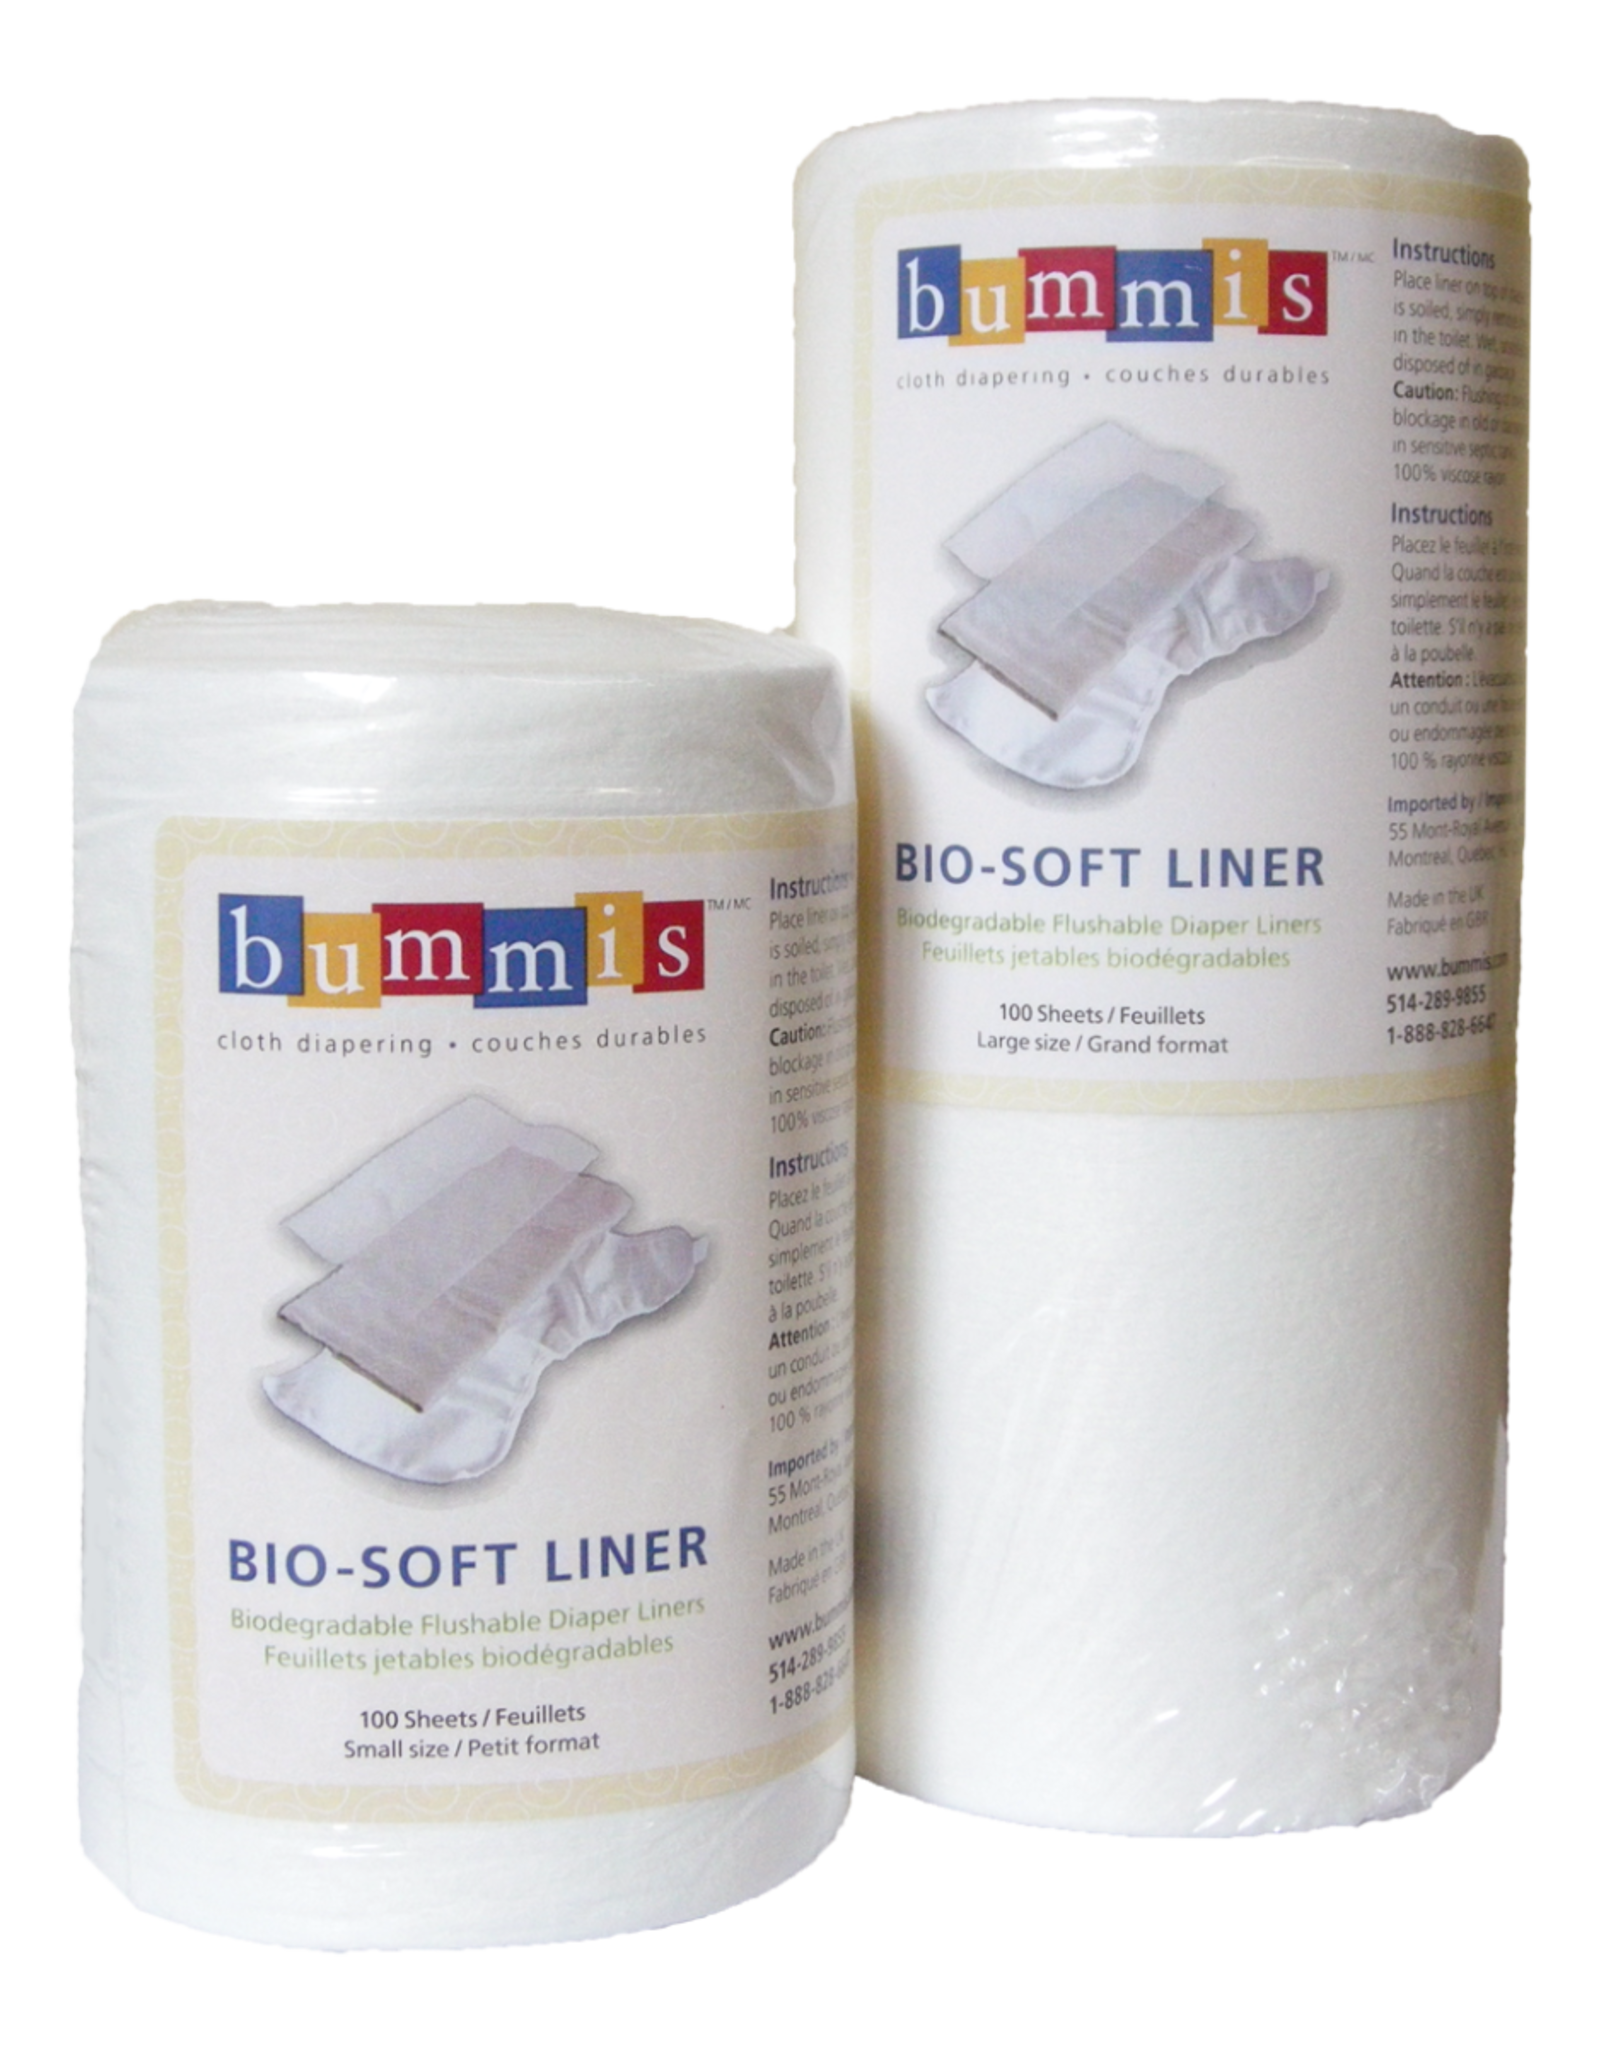 Bummis Bio-Soft Liner - Small Size - 100 sheets